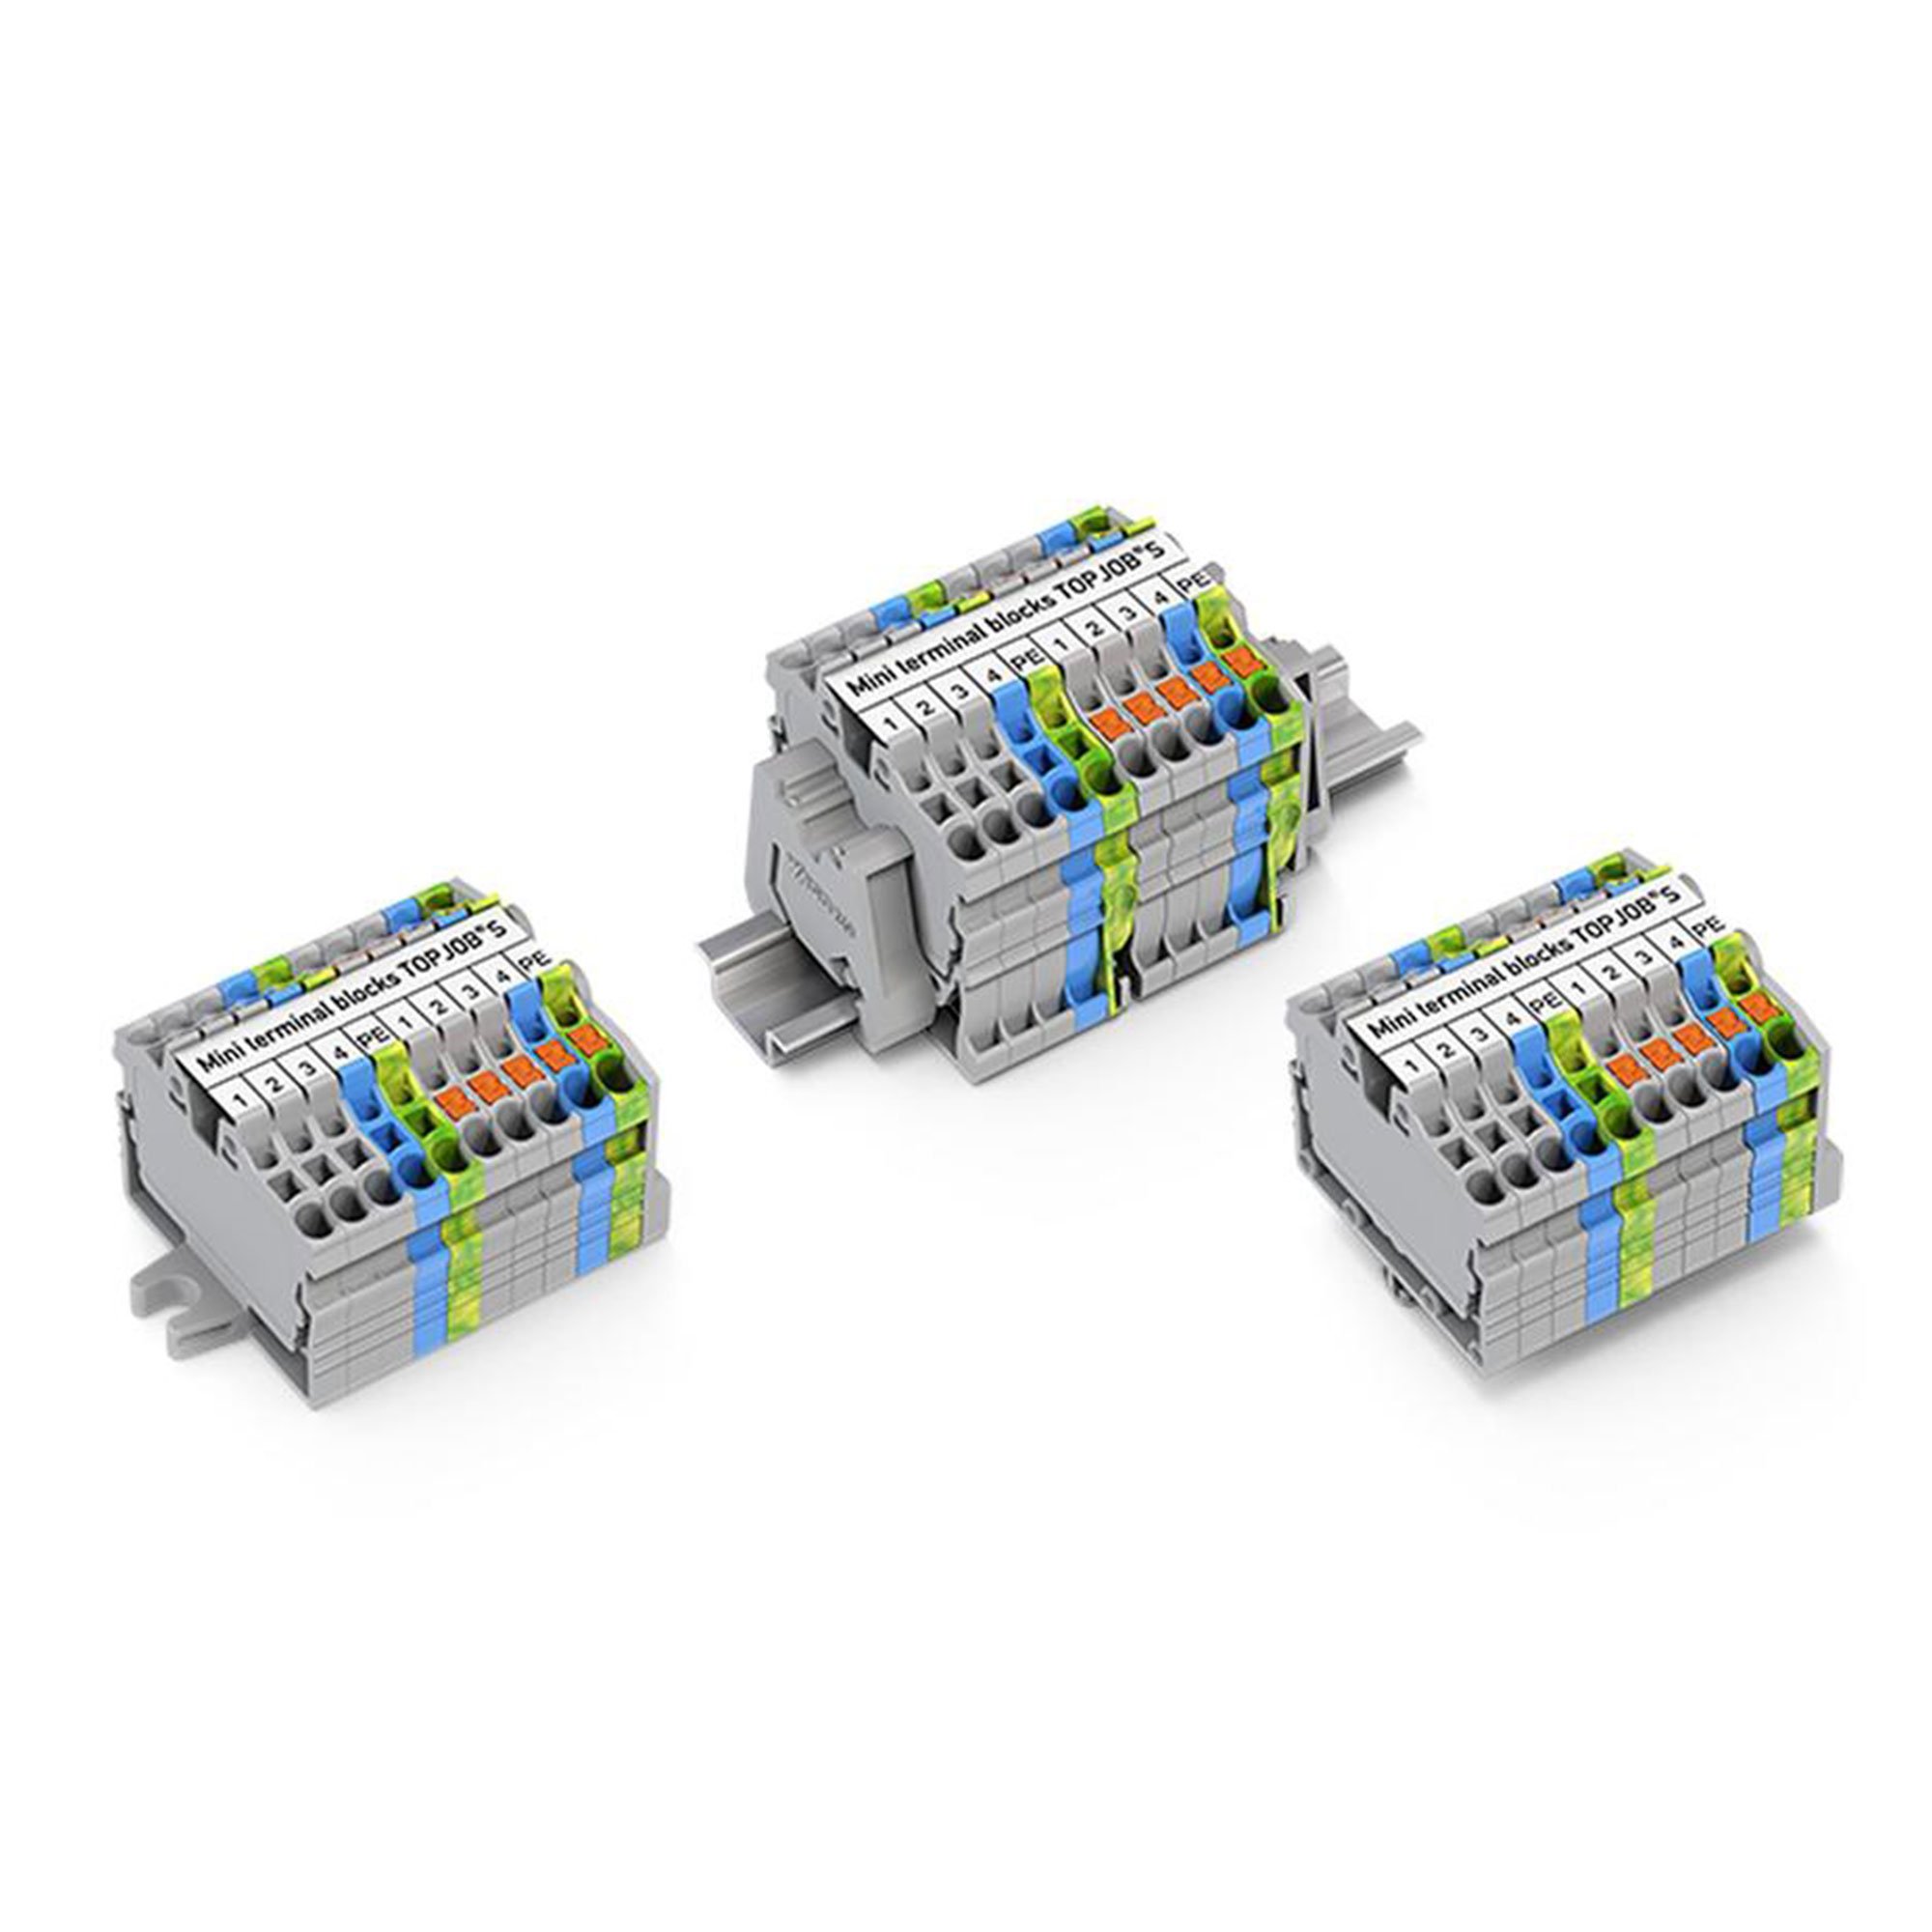 Miniature and micro terminal blocks